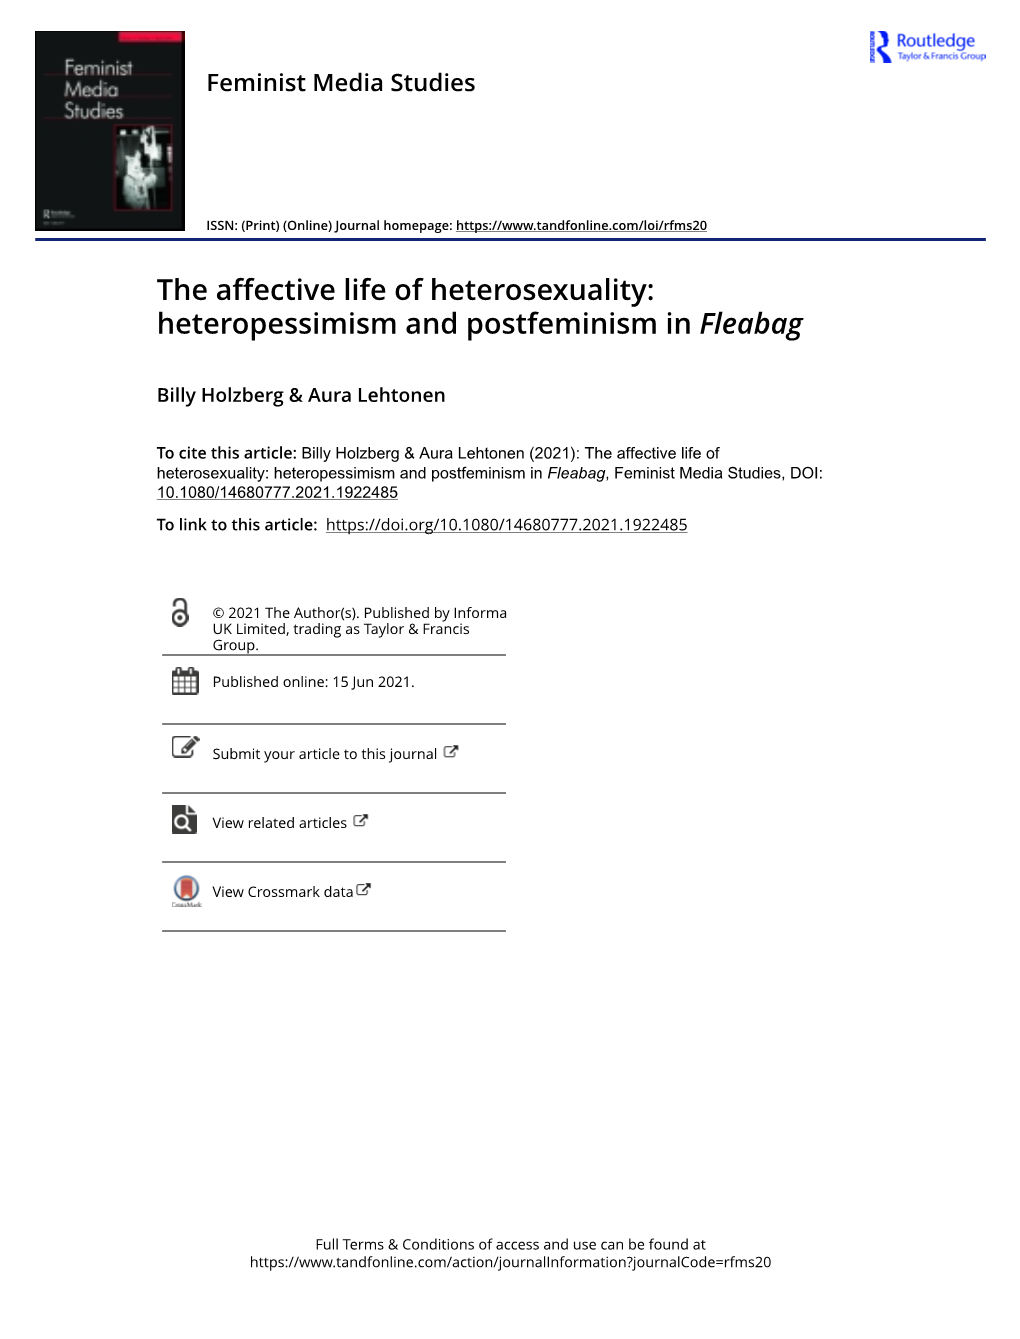 The Affective Life of Heterosexuality: Heteropessimism and Postfeminism in Fleabag